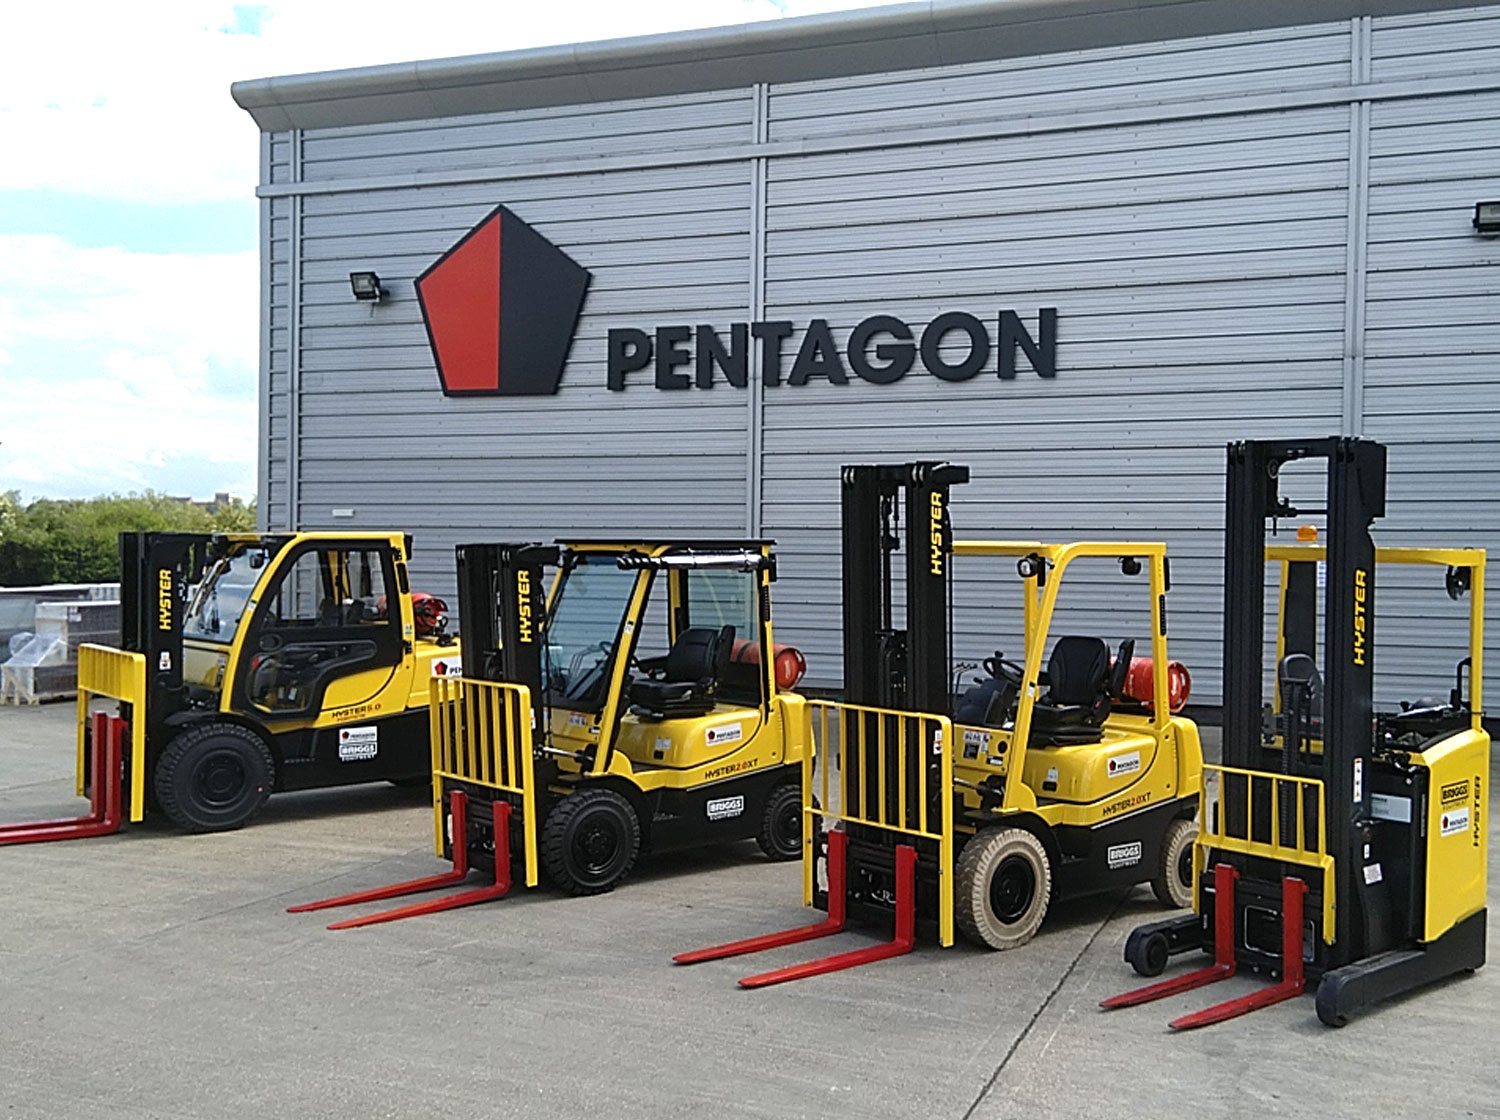 Briggs Equipment supplies machinery to Pentagon Freight